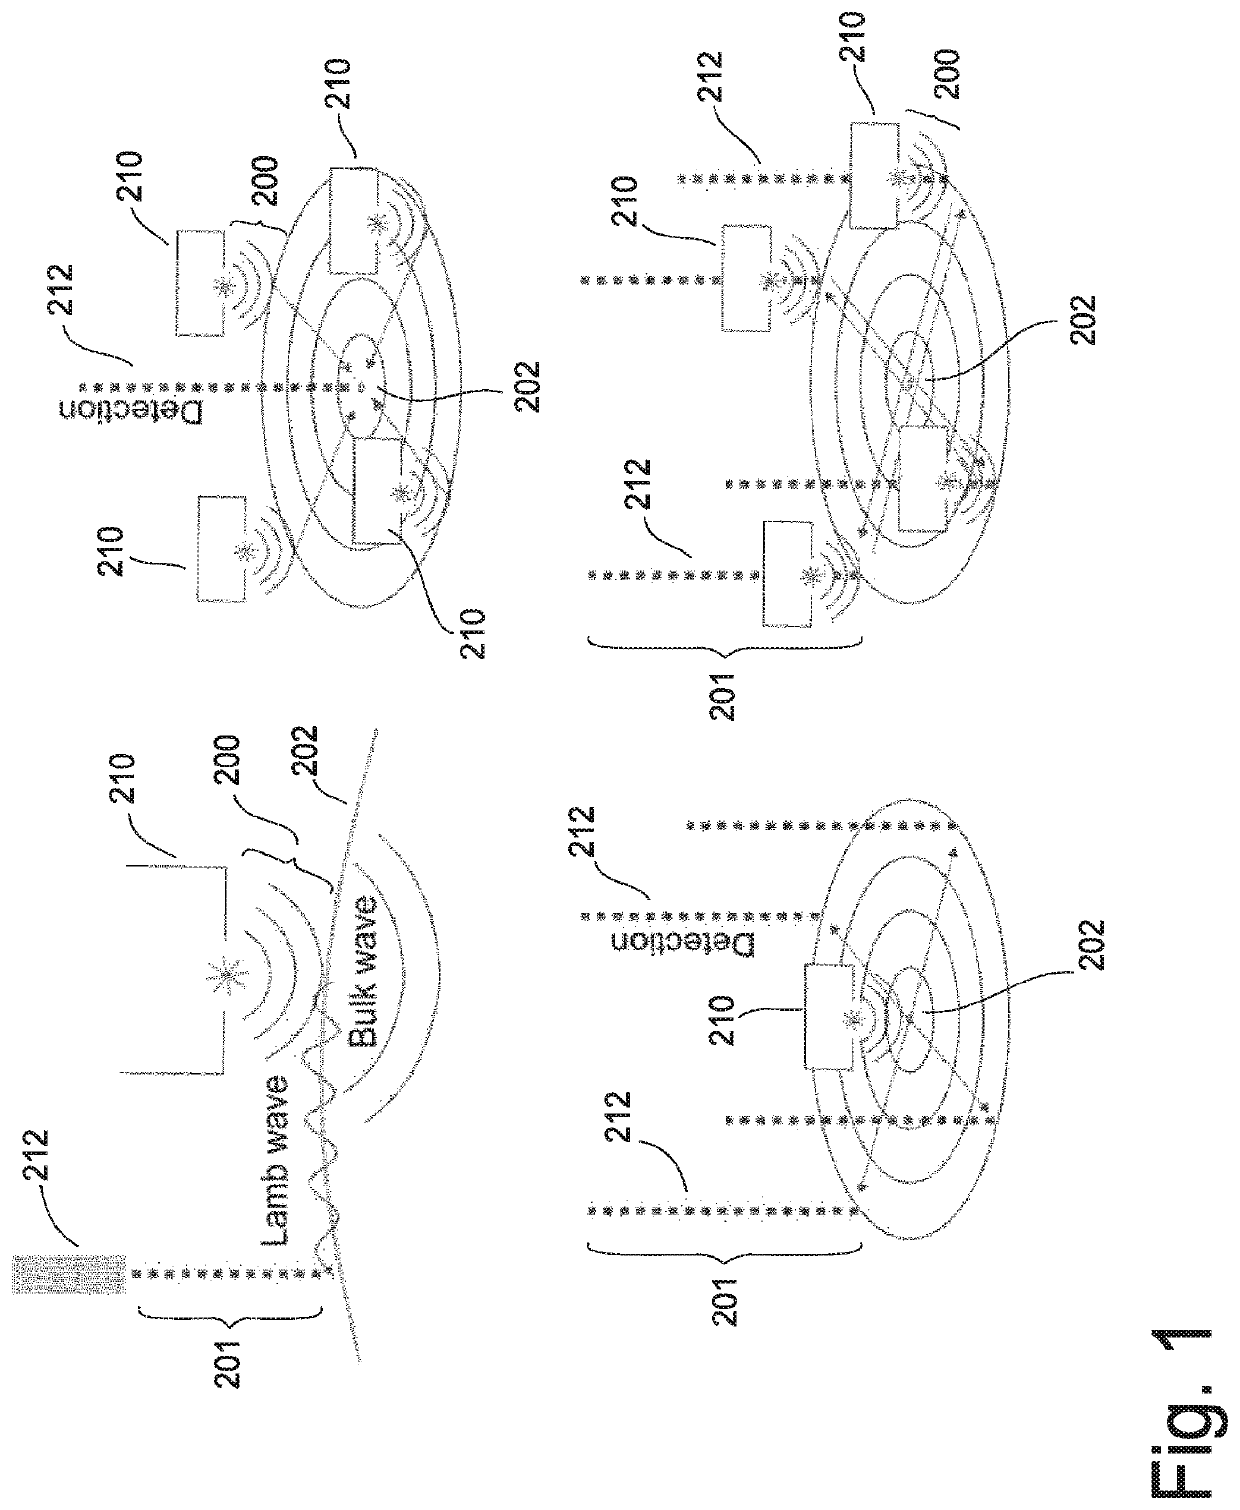 Method and arrangement for eye pressure measurements